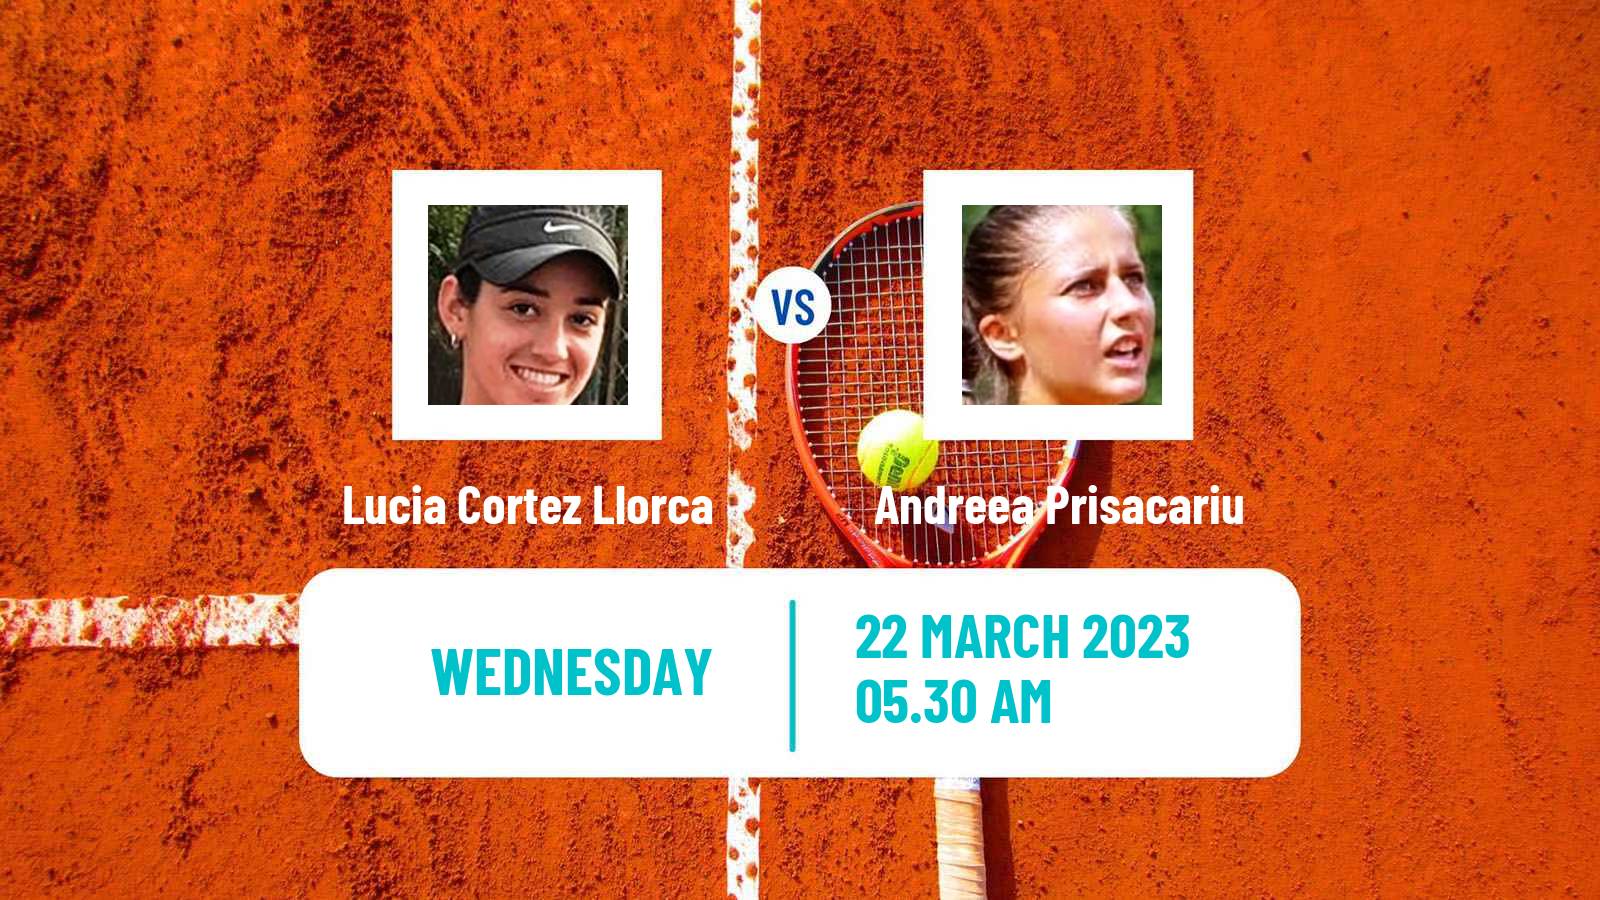 Tennis ITF Tournaments Lucia Cortez Llorca - Andreea Prisacariu